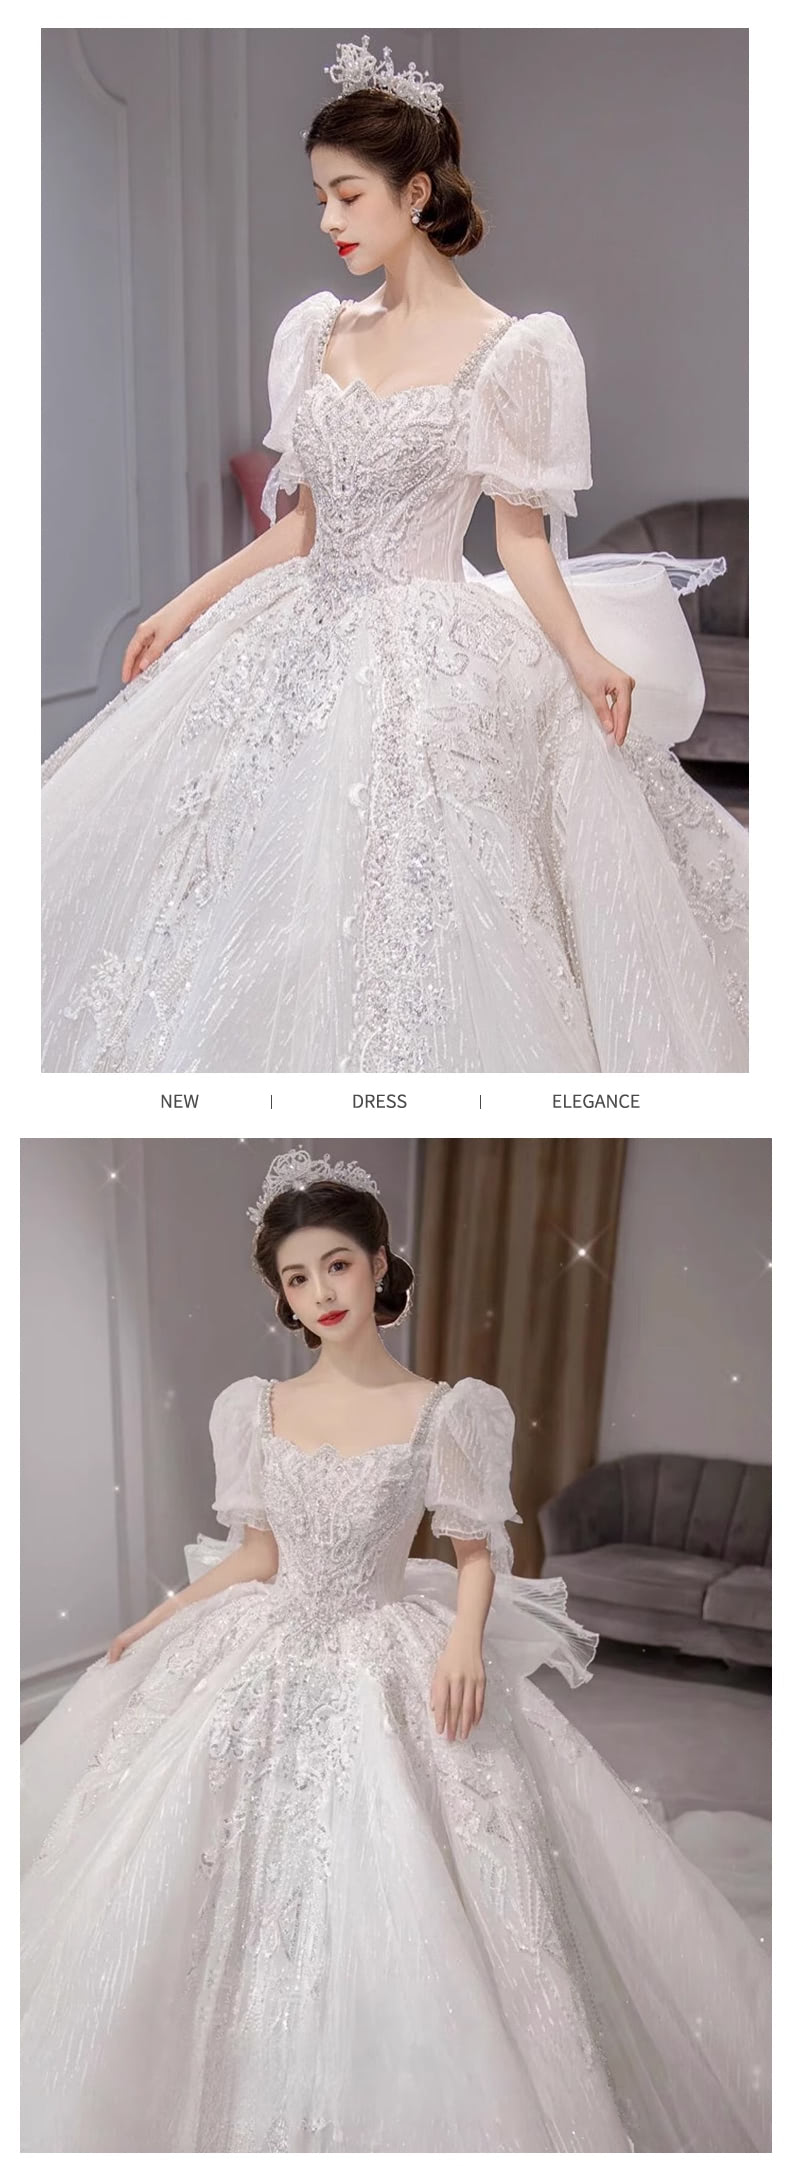 Luxury-Shining-Square-Neck-Lace-White-Long-Flowing-Wedding-Dress14